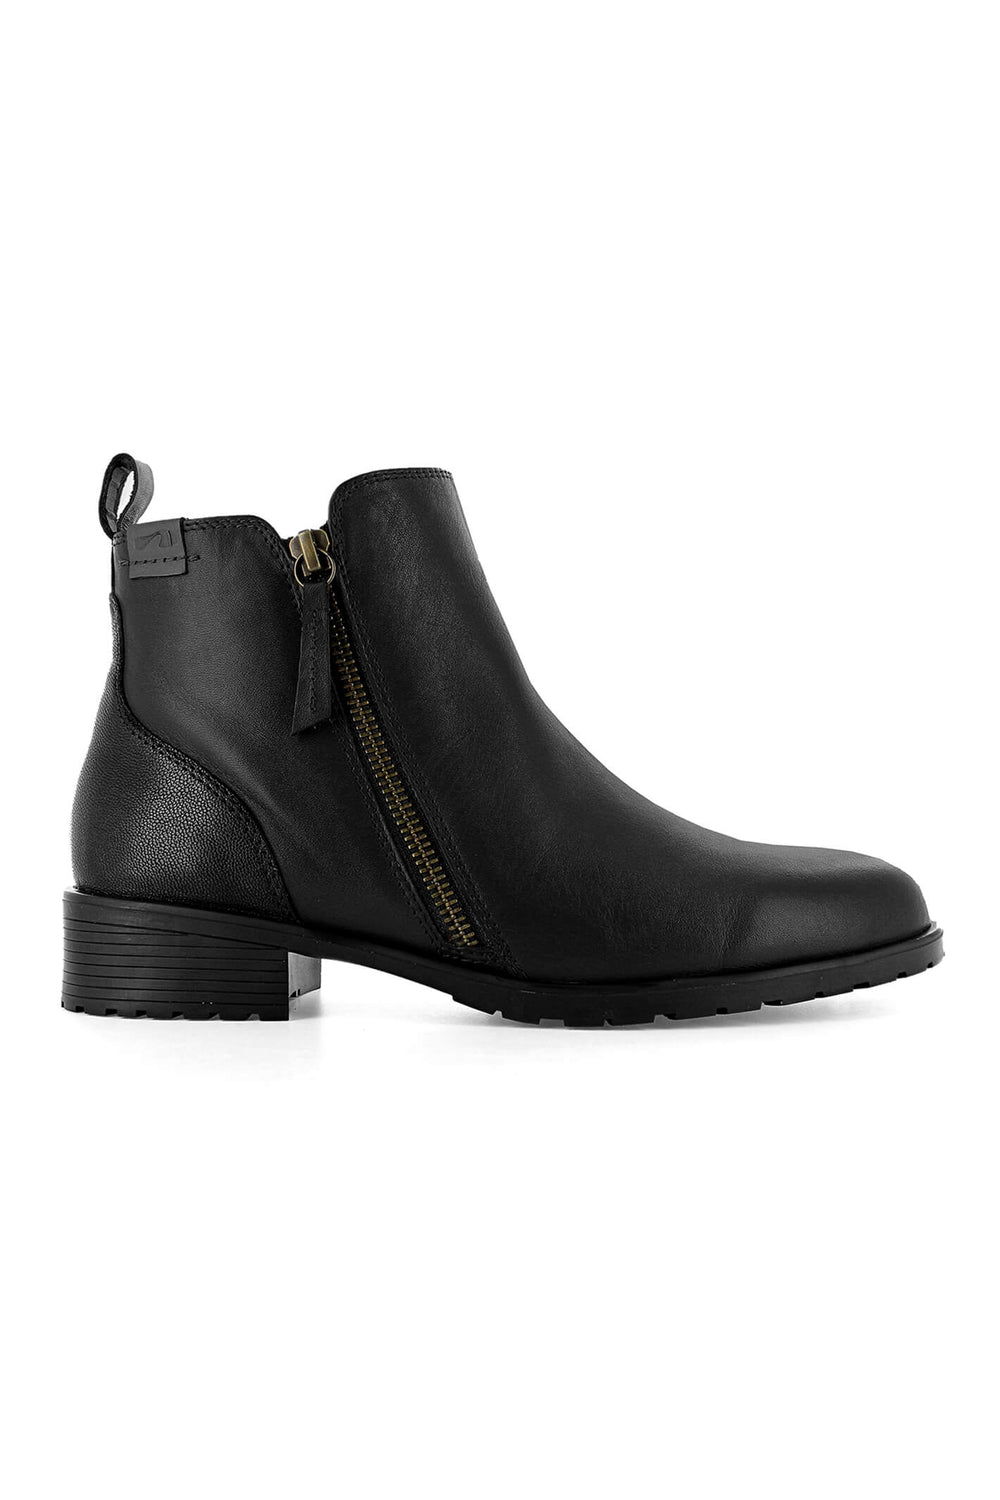 Strive Sandringham Black Zip Leather Boots - Shirley Allum Boutique